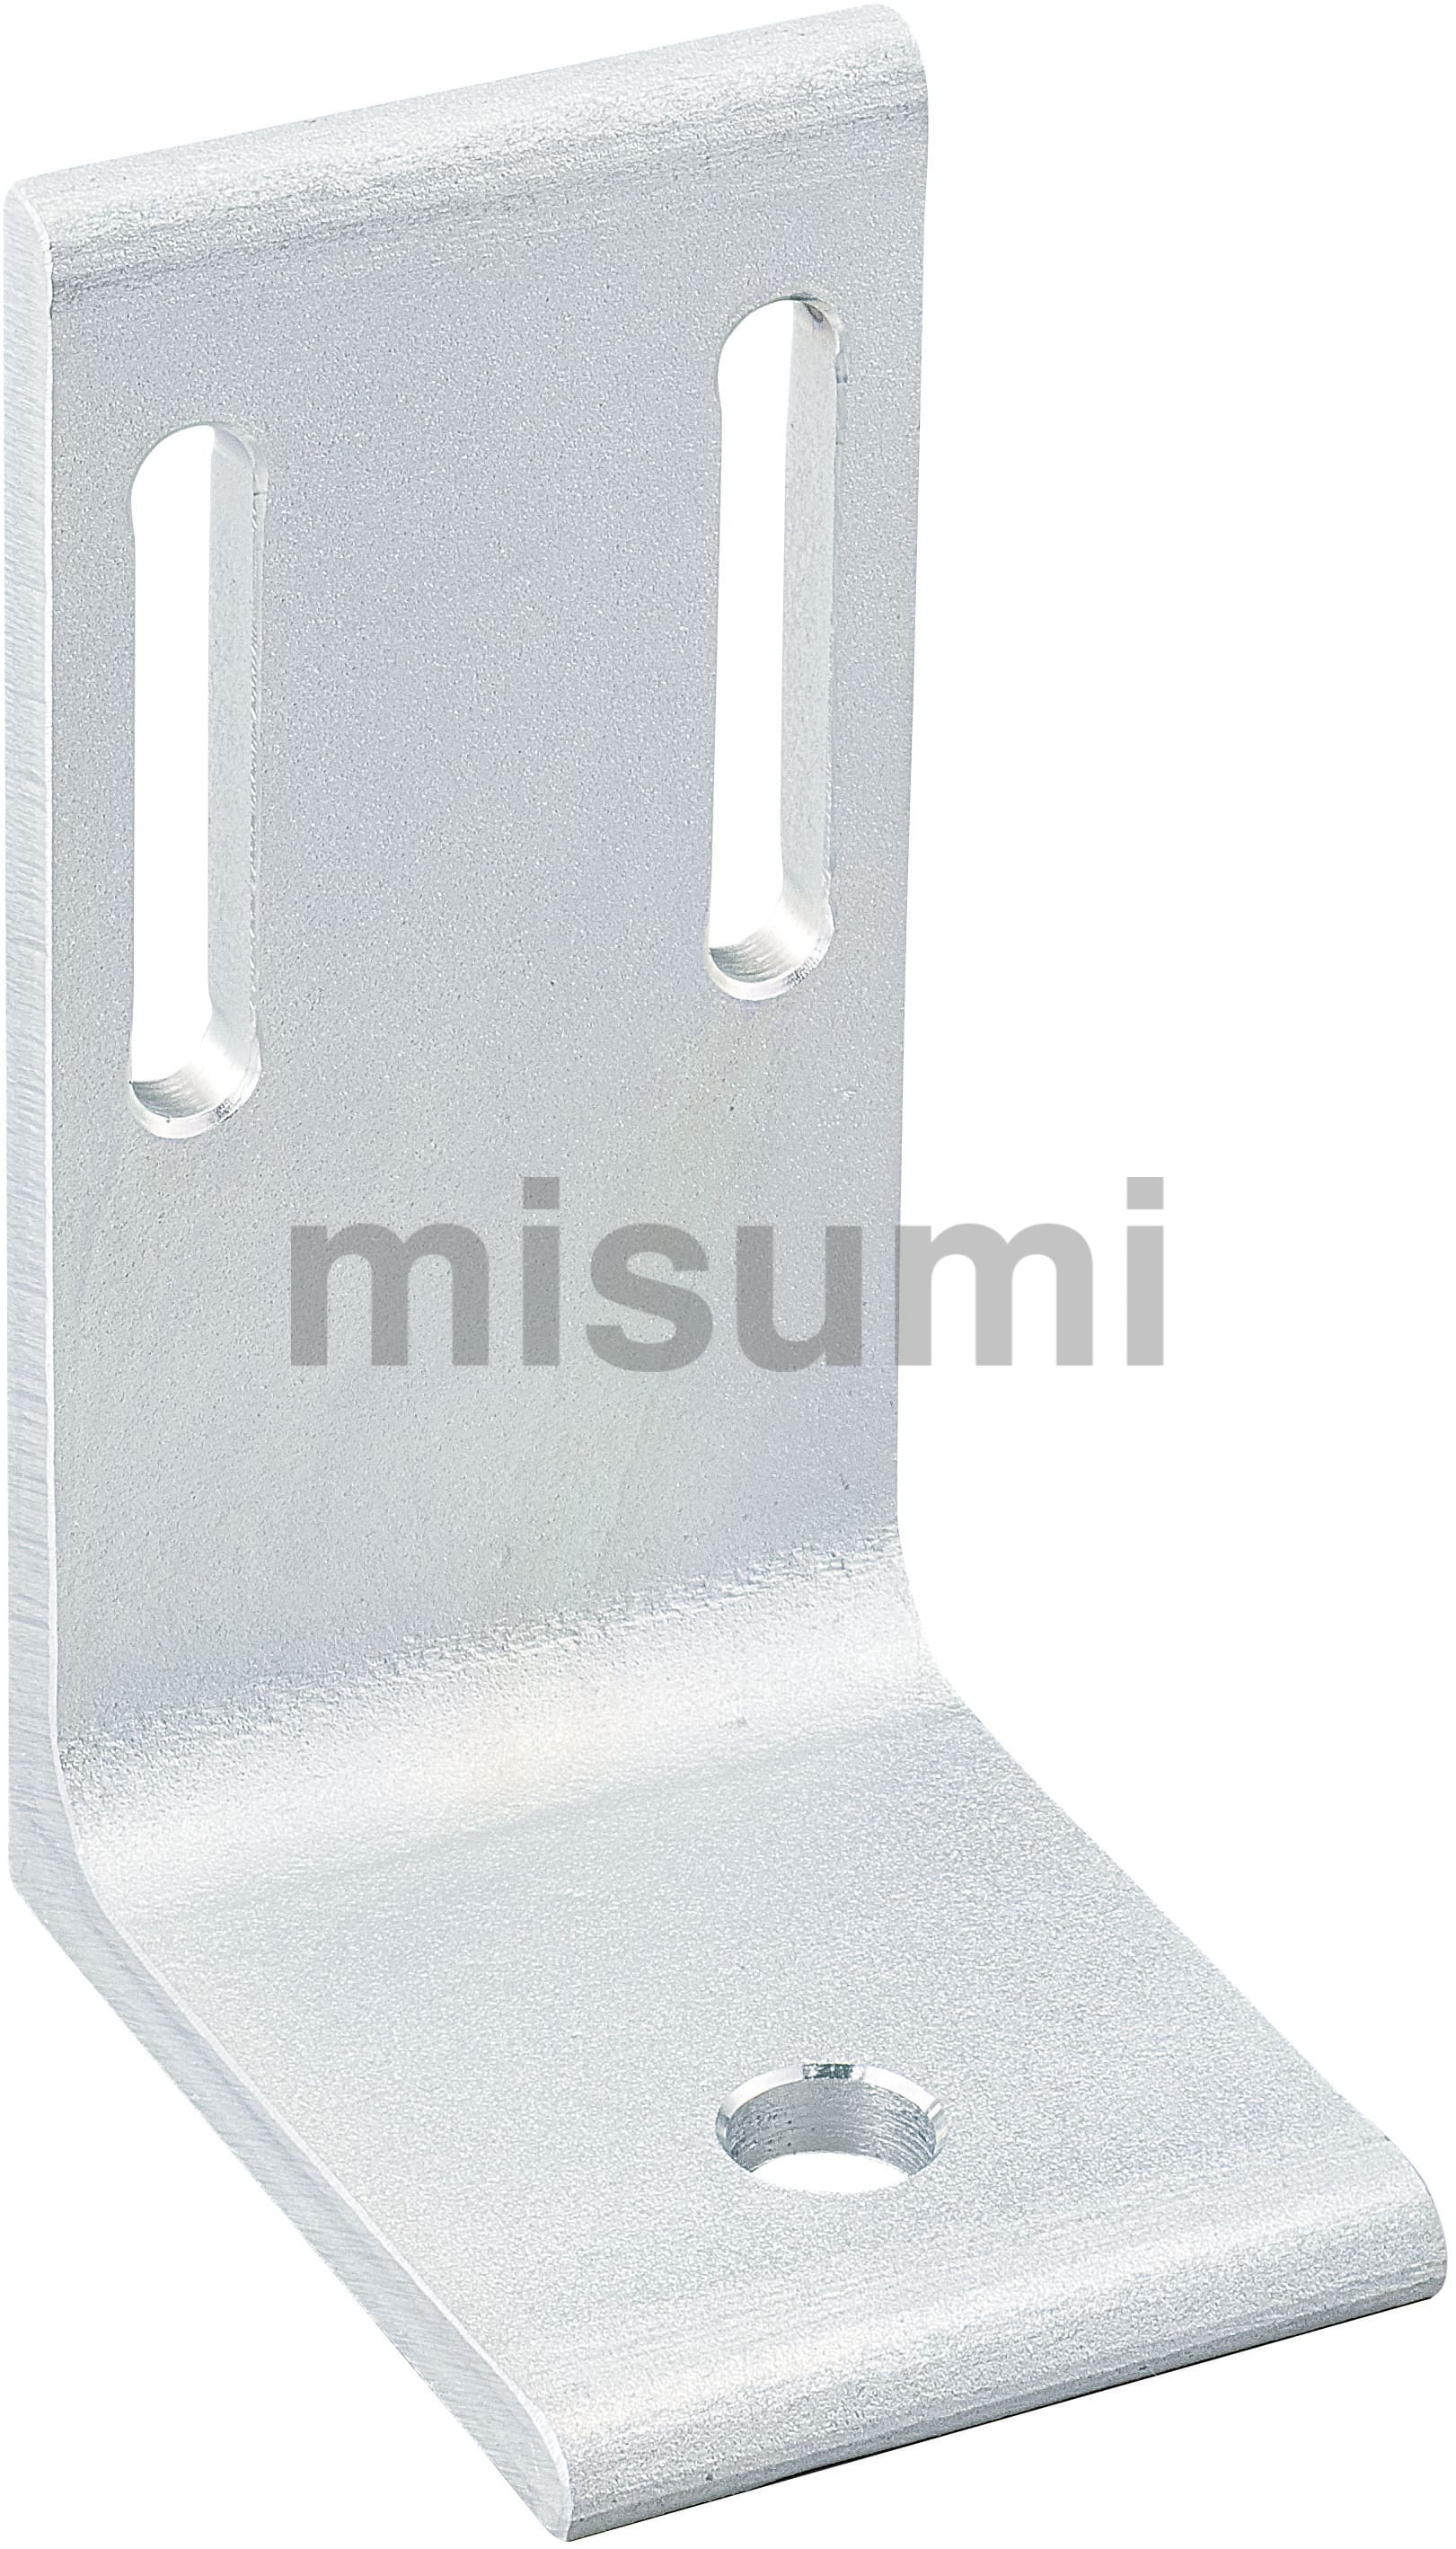 STYD16 アンカーステー 標準タイプ ミスミ MISUMI(ミスミ)